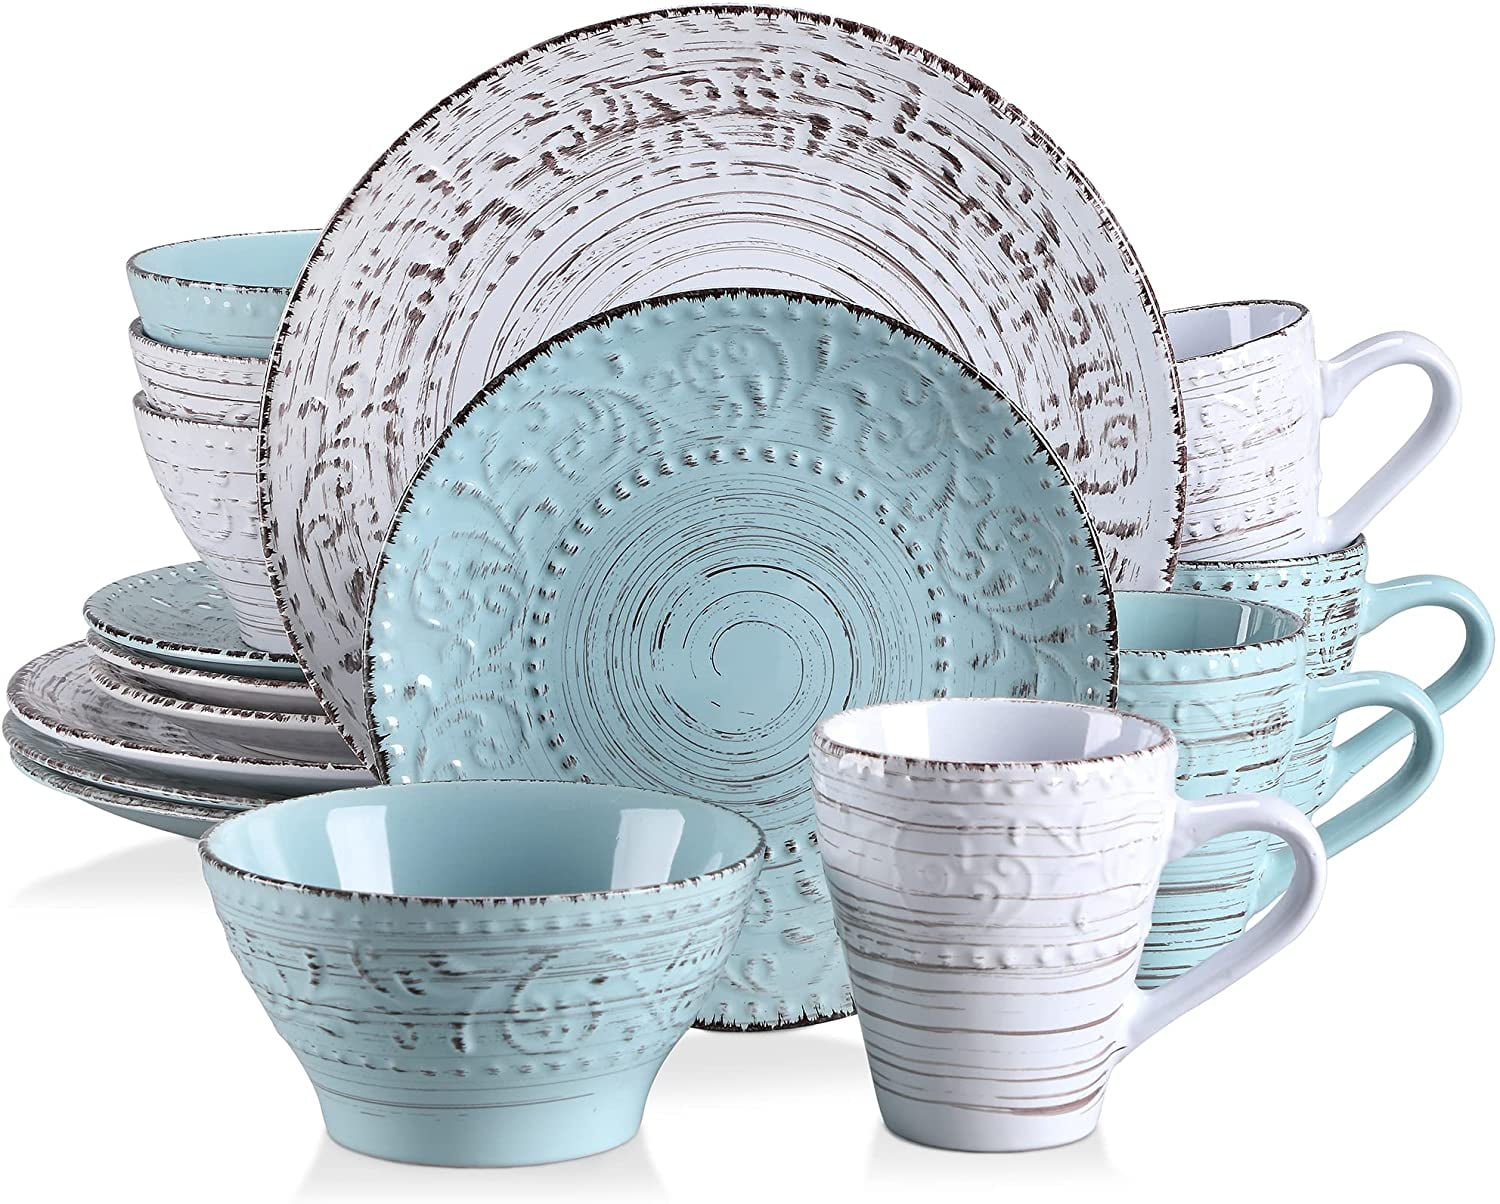 Handmade Ceramic Kitchenware Dessert Plate Serving Dish Beige Tableware Appetizer Serveware Home Decor Porcelain Plate Sand 8” 1 pc